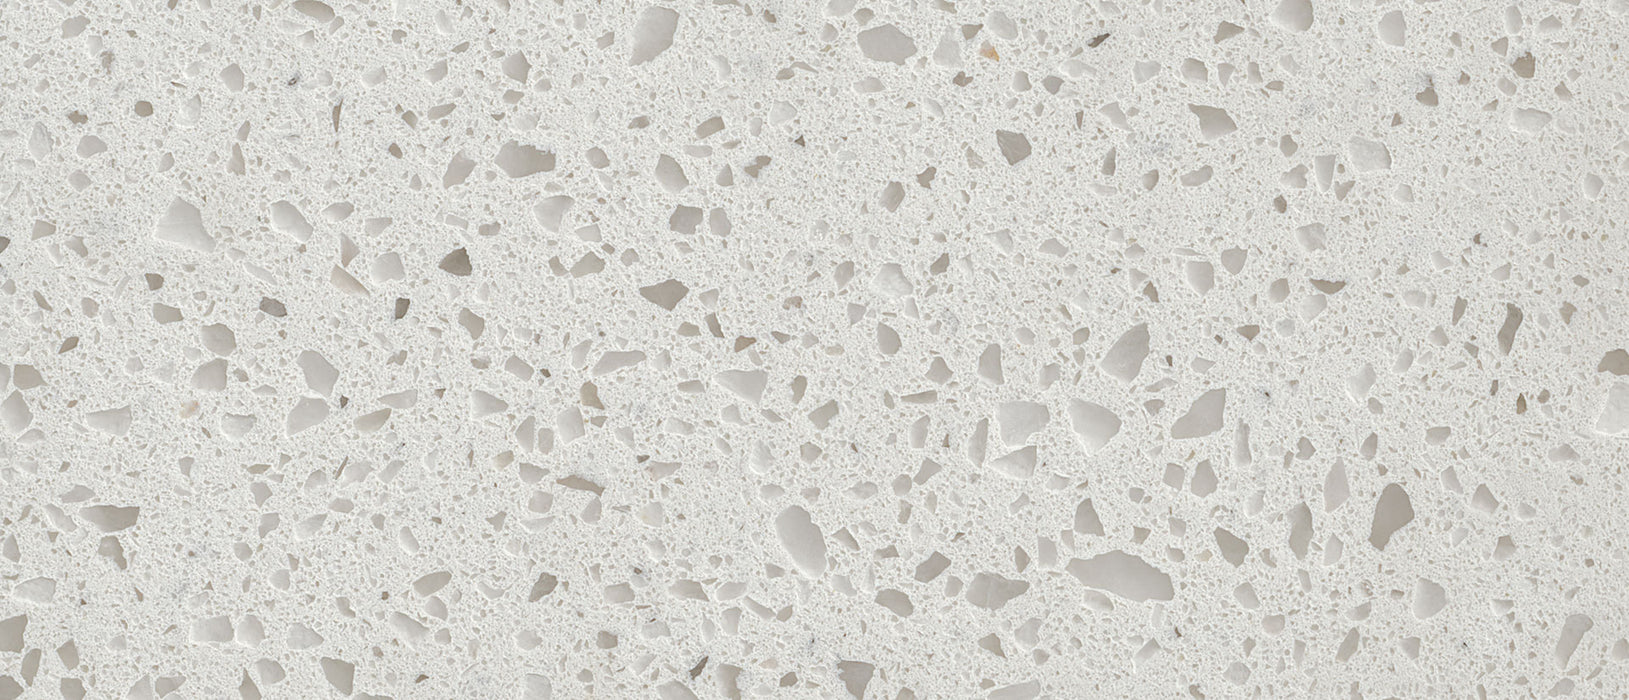 Iced White quartz countertop close up